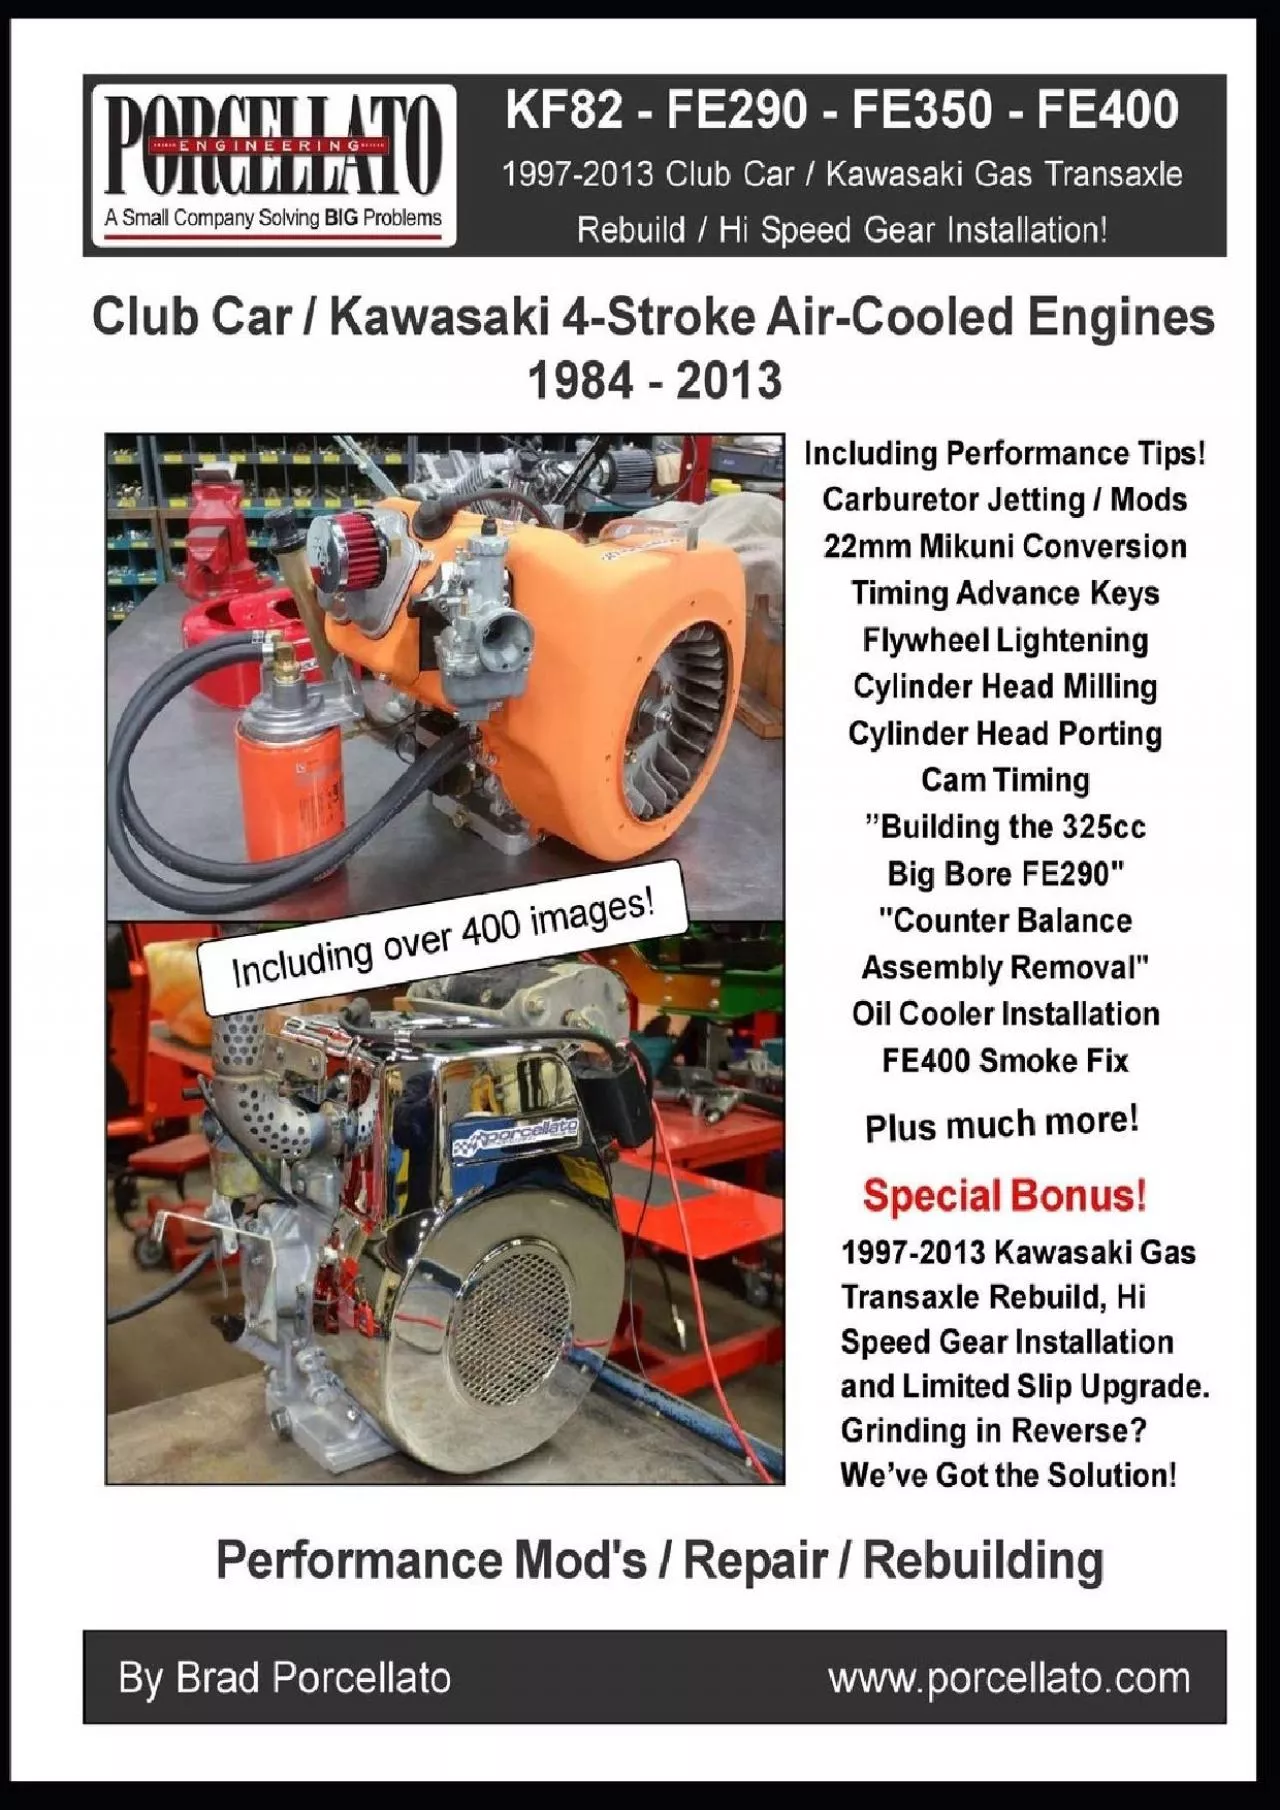 [EBOOK] Club Car / Kawasaki 4-Stroke Air-Cooled Engines 1984 - 2013: KF82 - FE290 - FE350